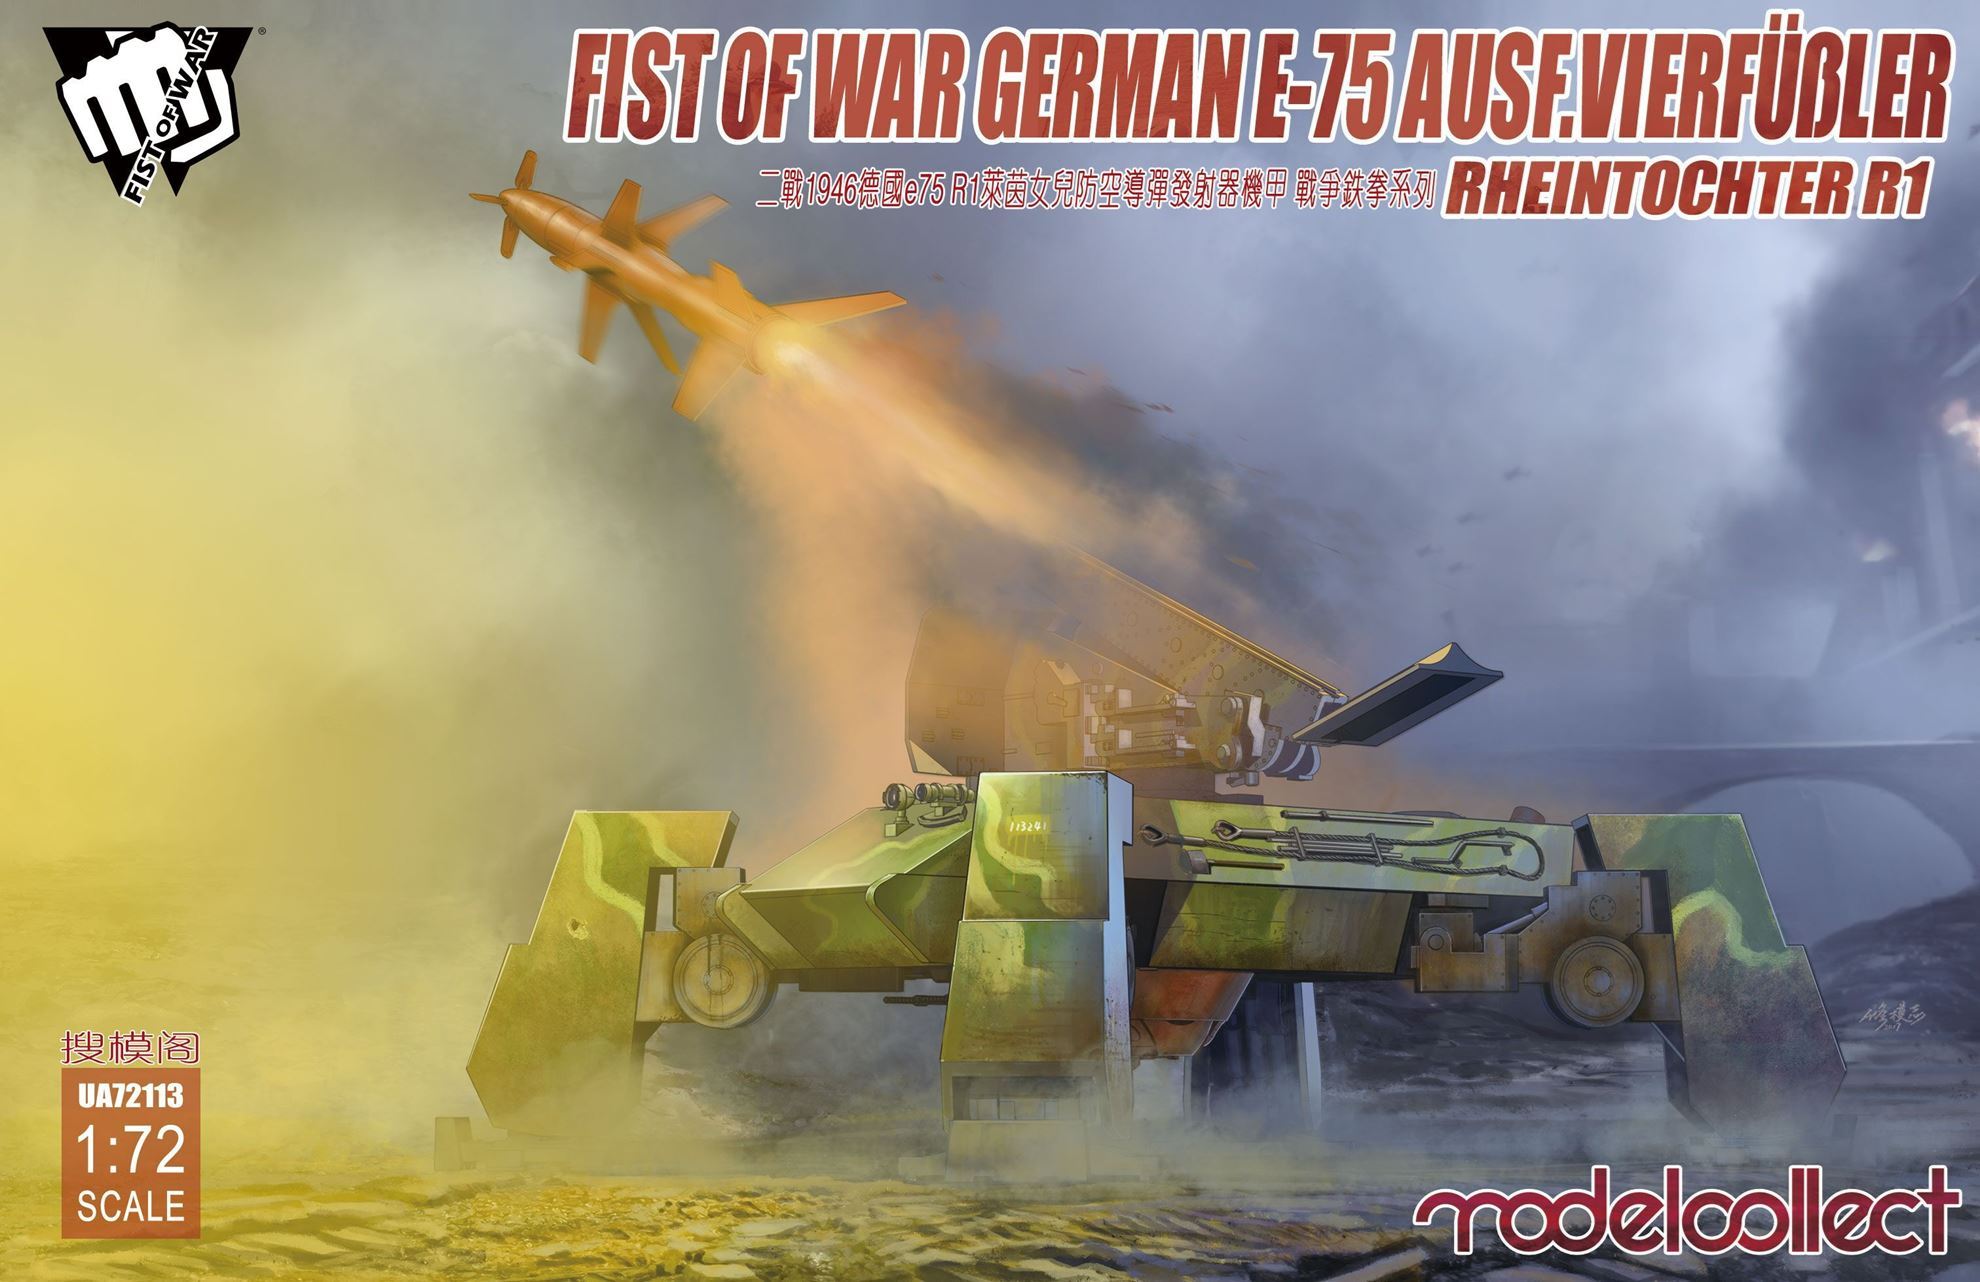 Fist of War - German E75 Ausf. vierfubler Rheintochter R1